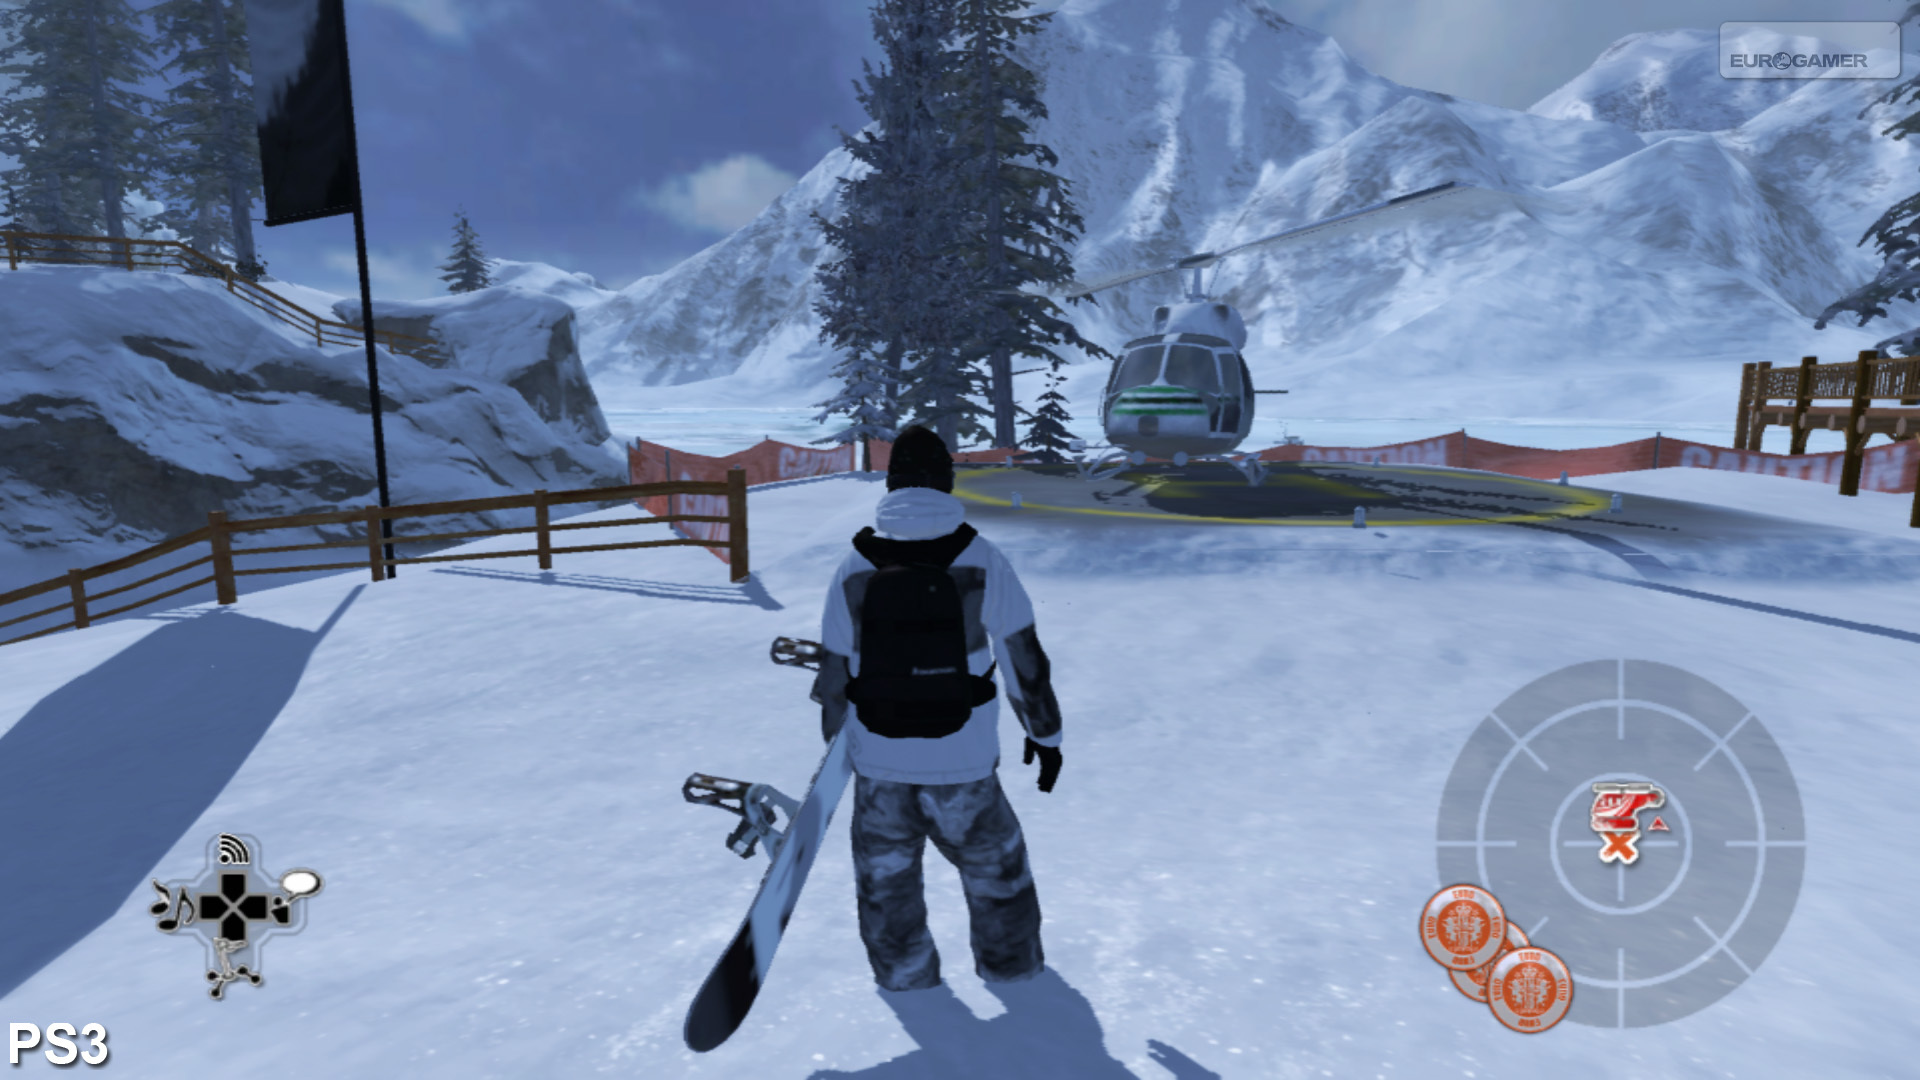 Snowboarding Desktop Wallpaper Of Video Game